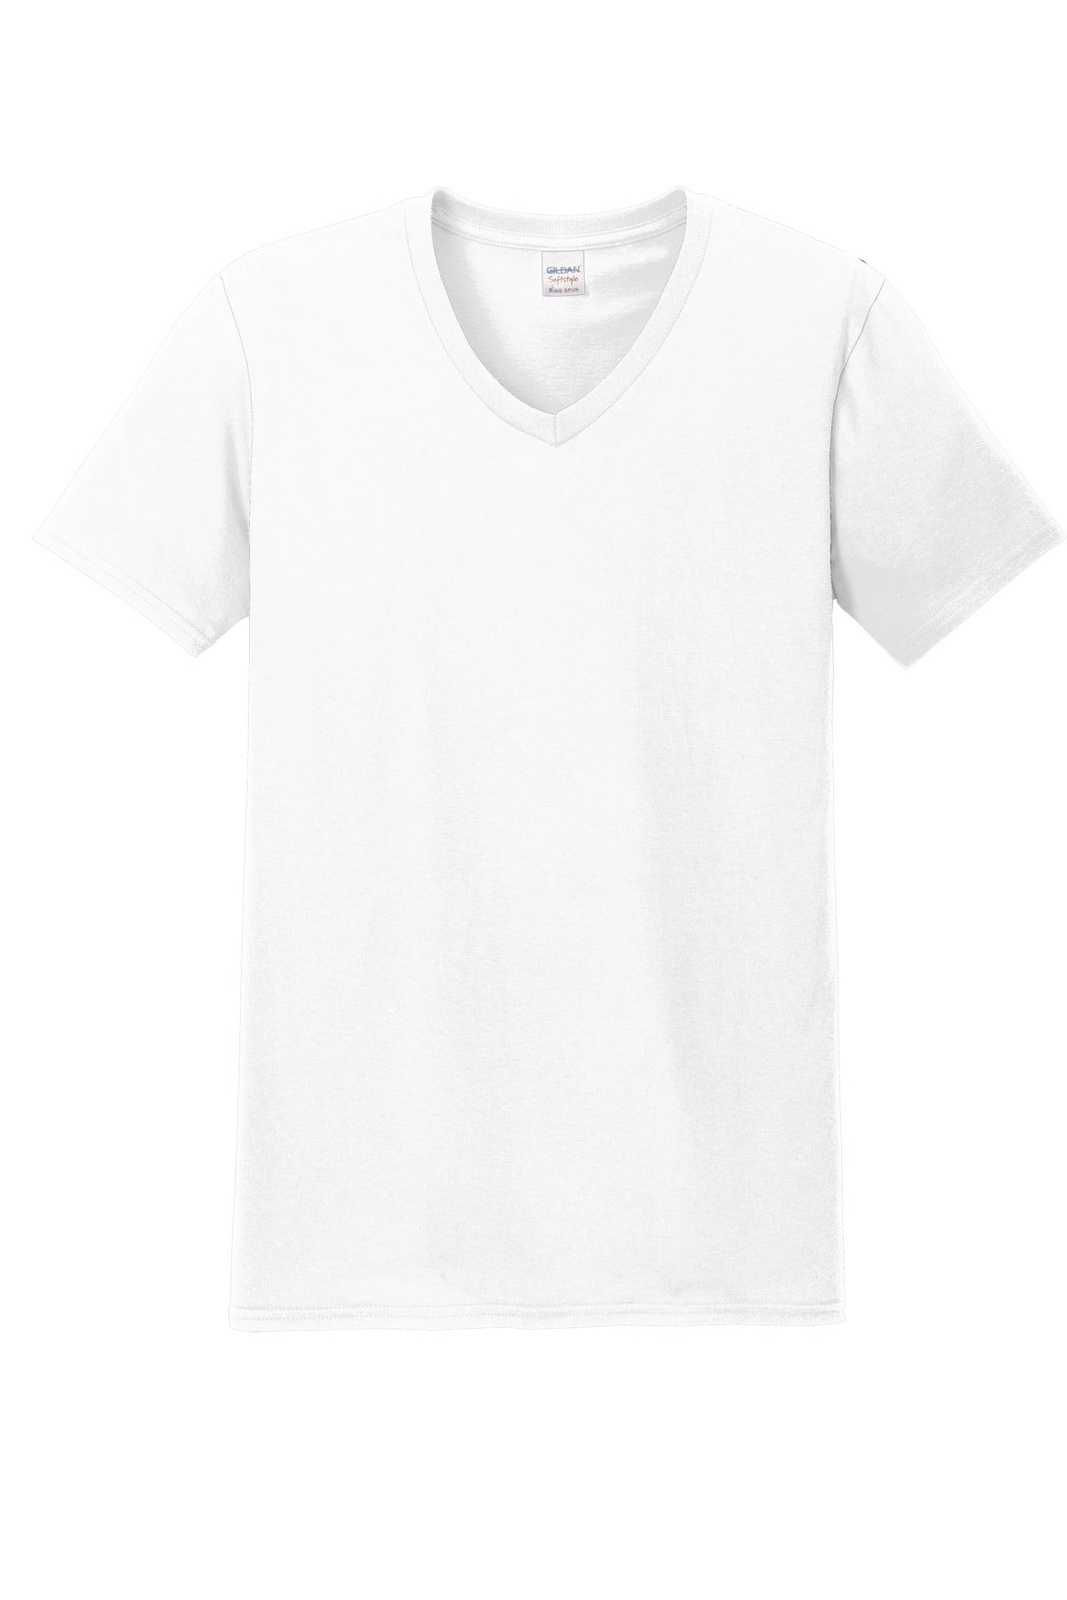 Gildan 64V00 Softstyle V-Neck T-Shirt - White - HIT a Double